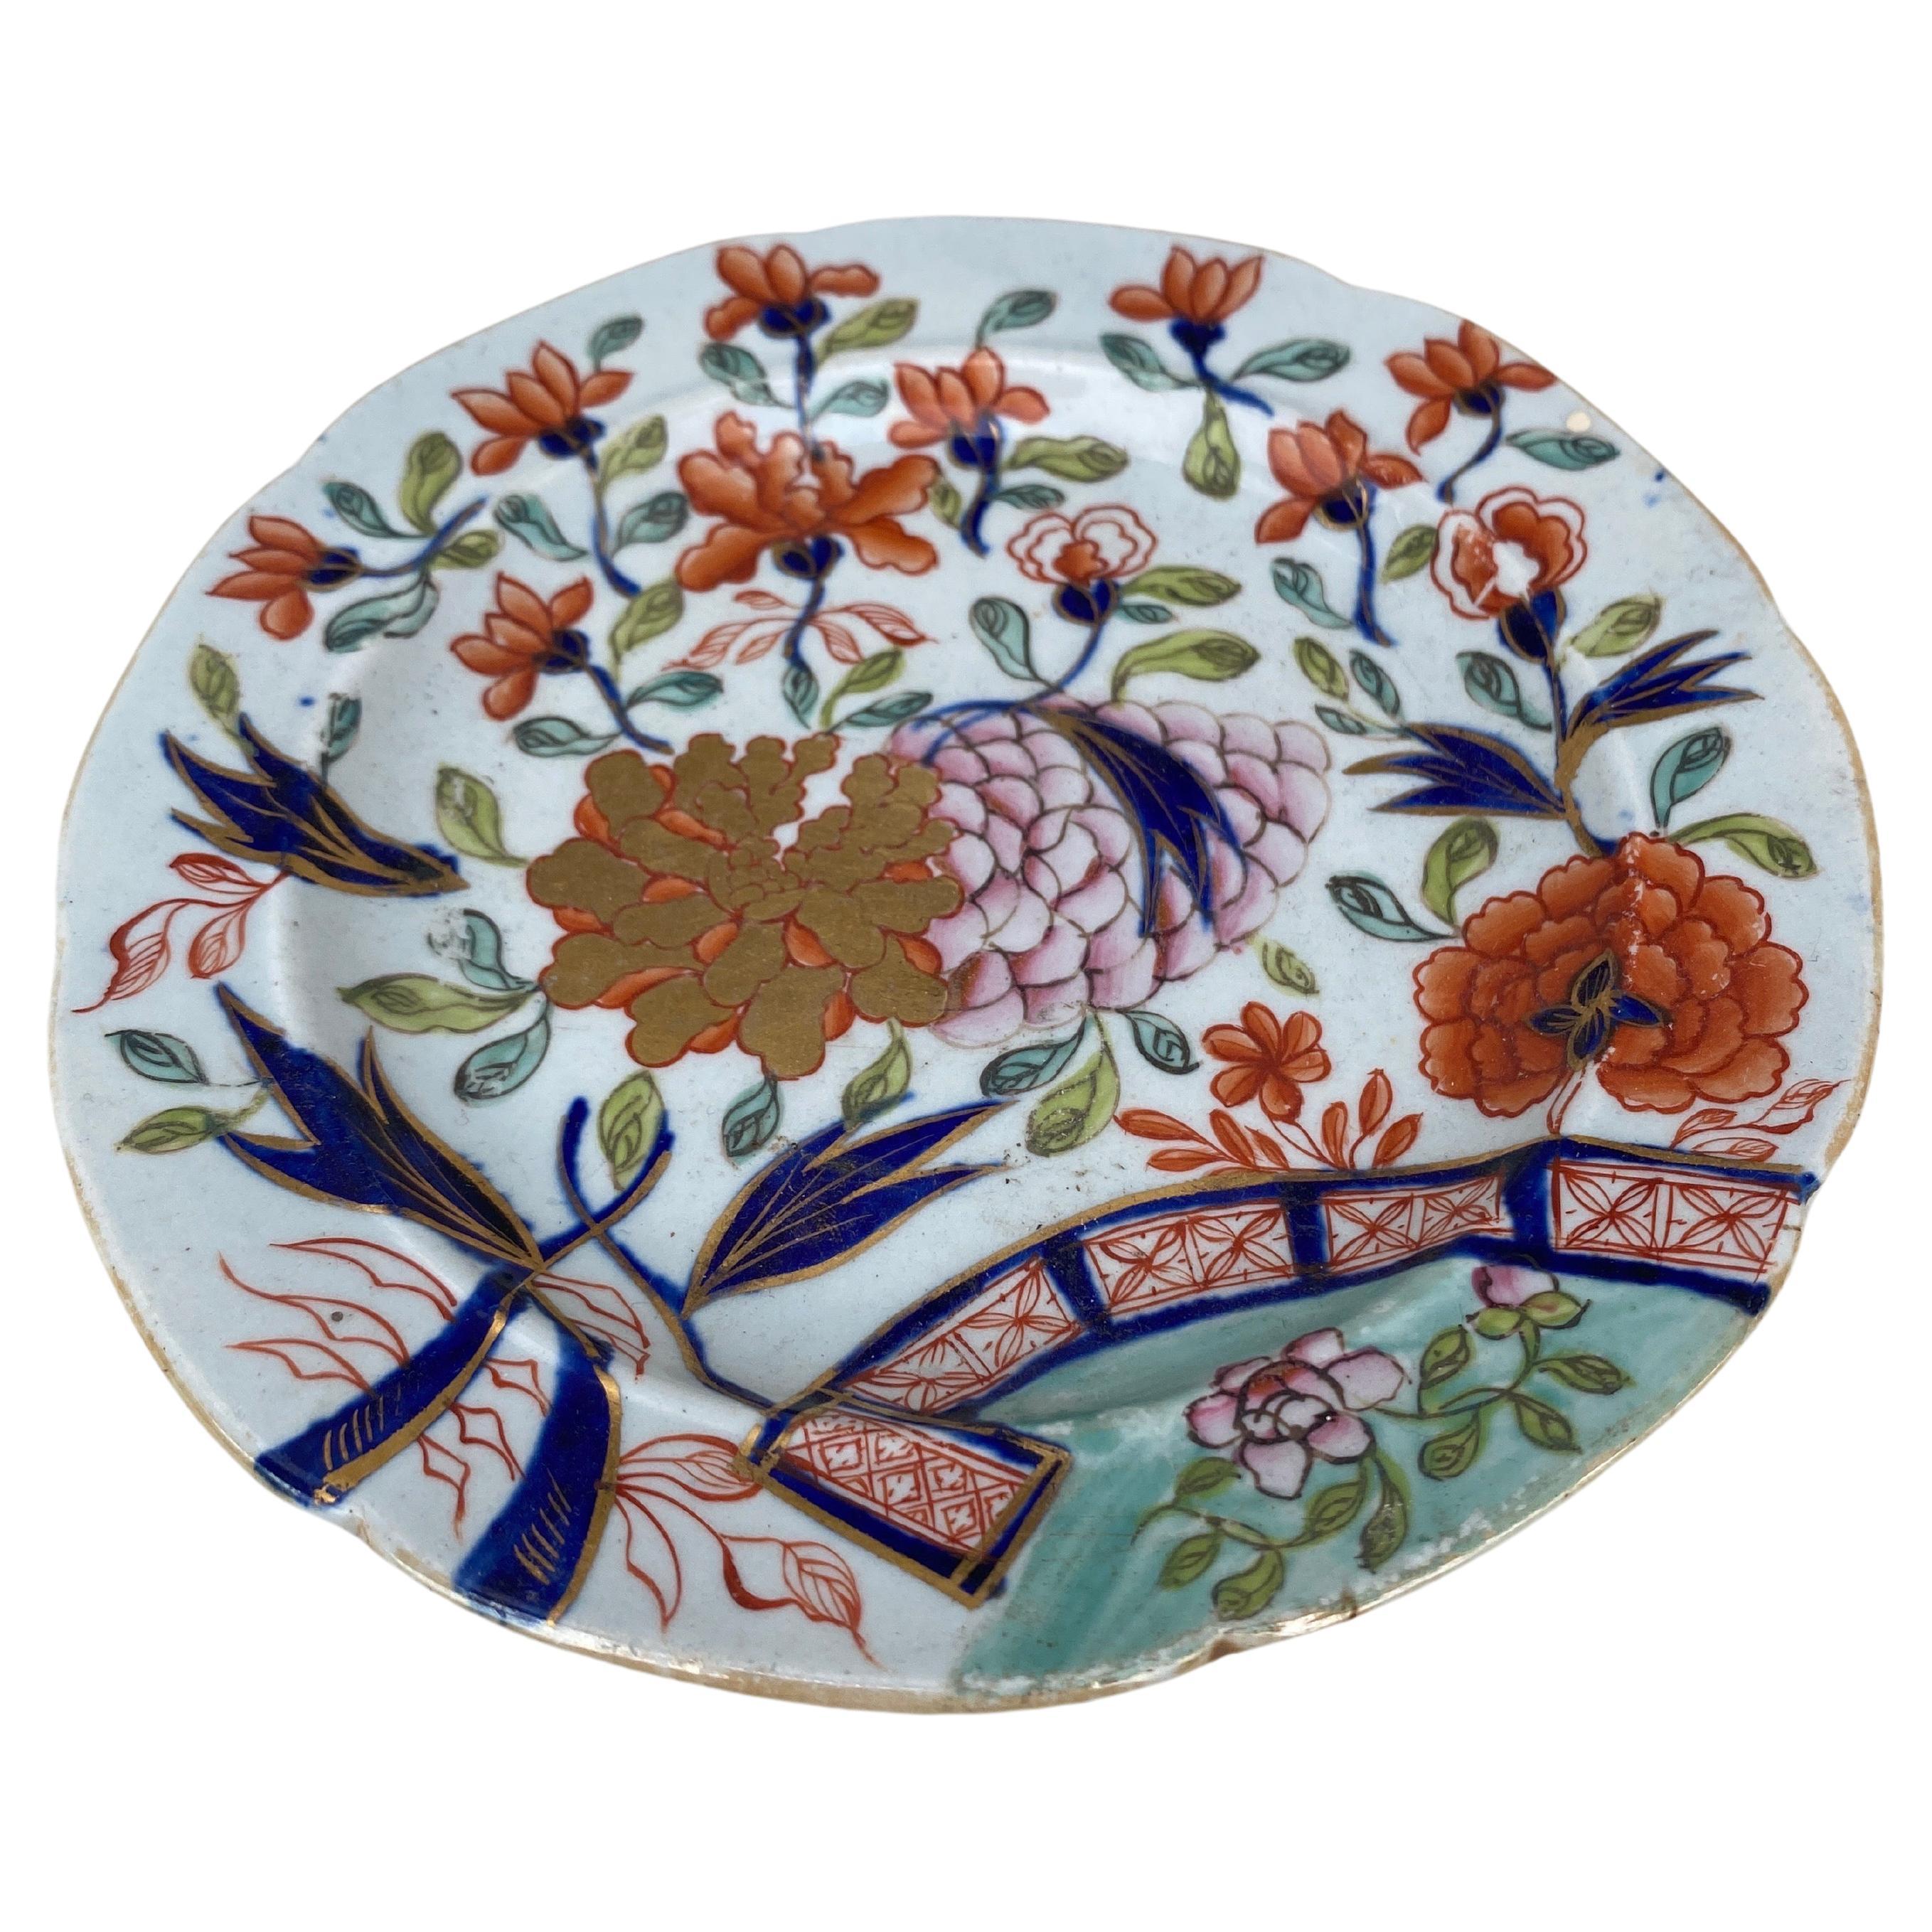 Small English ironstone plate circa 1890.
Chinoiserie or Imari style.
6 inches diameter.